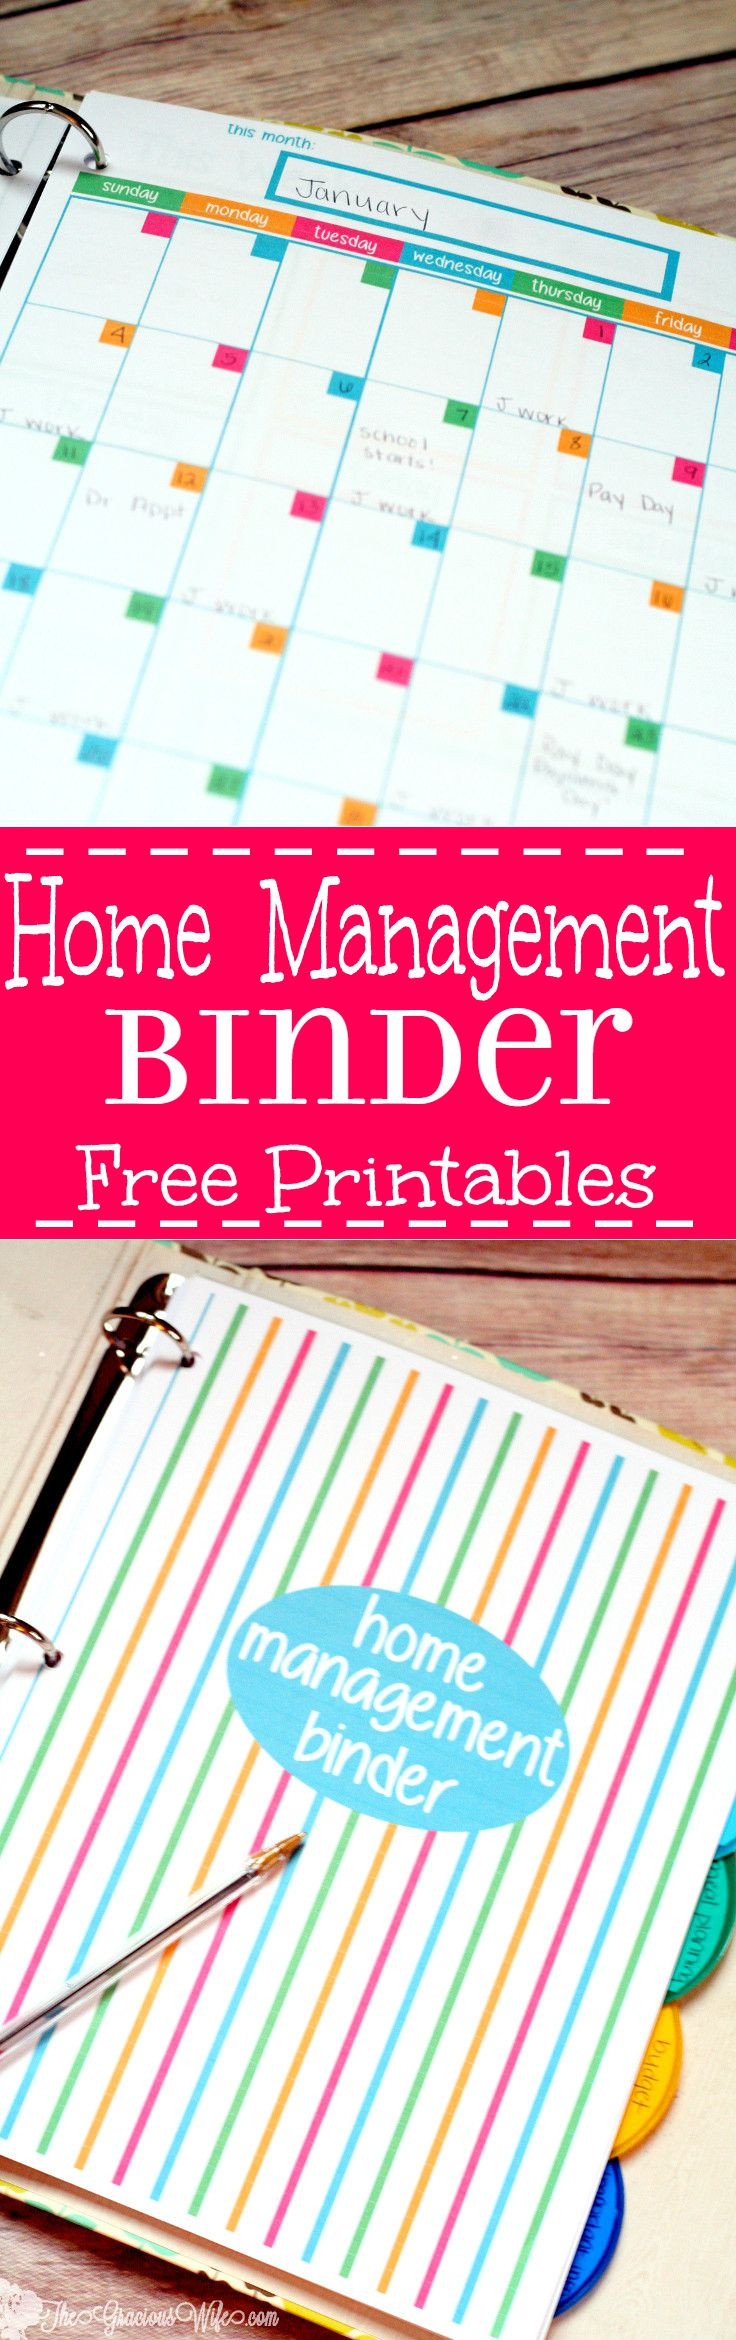 Home Organization Binder
 Home Management Binder FREE Printables